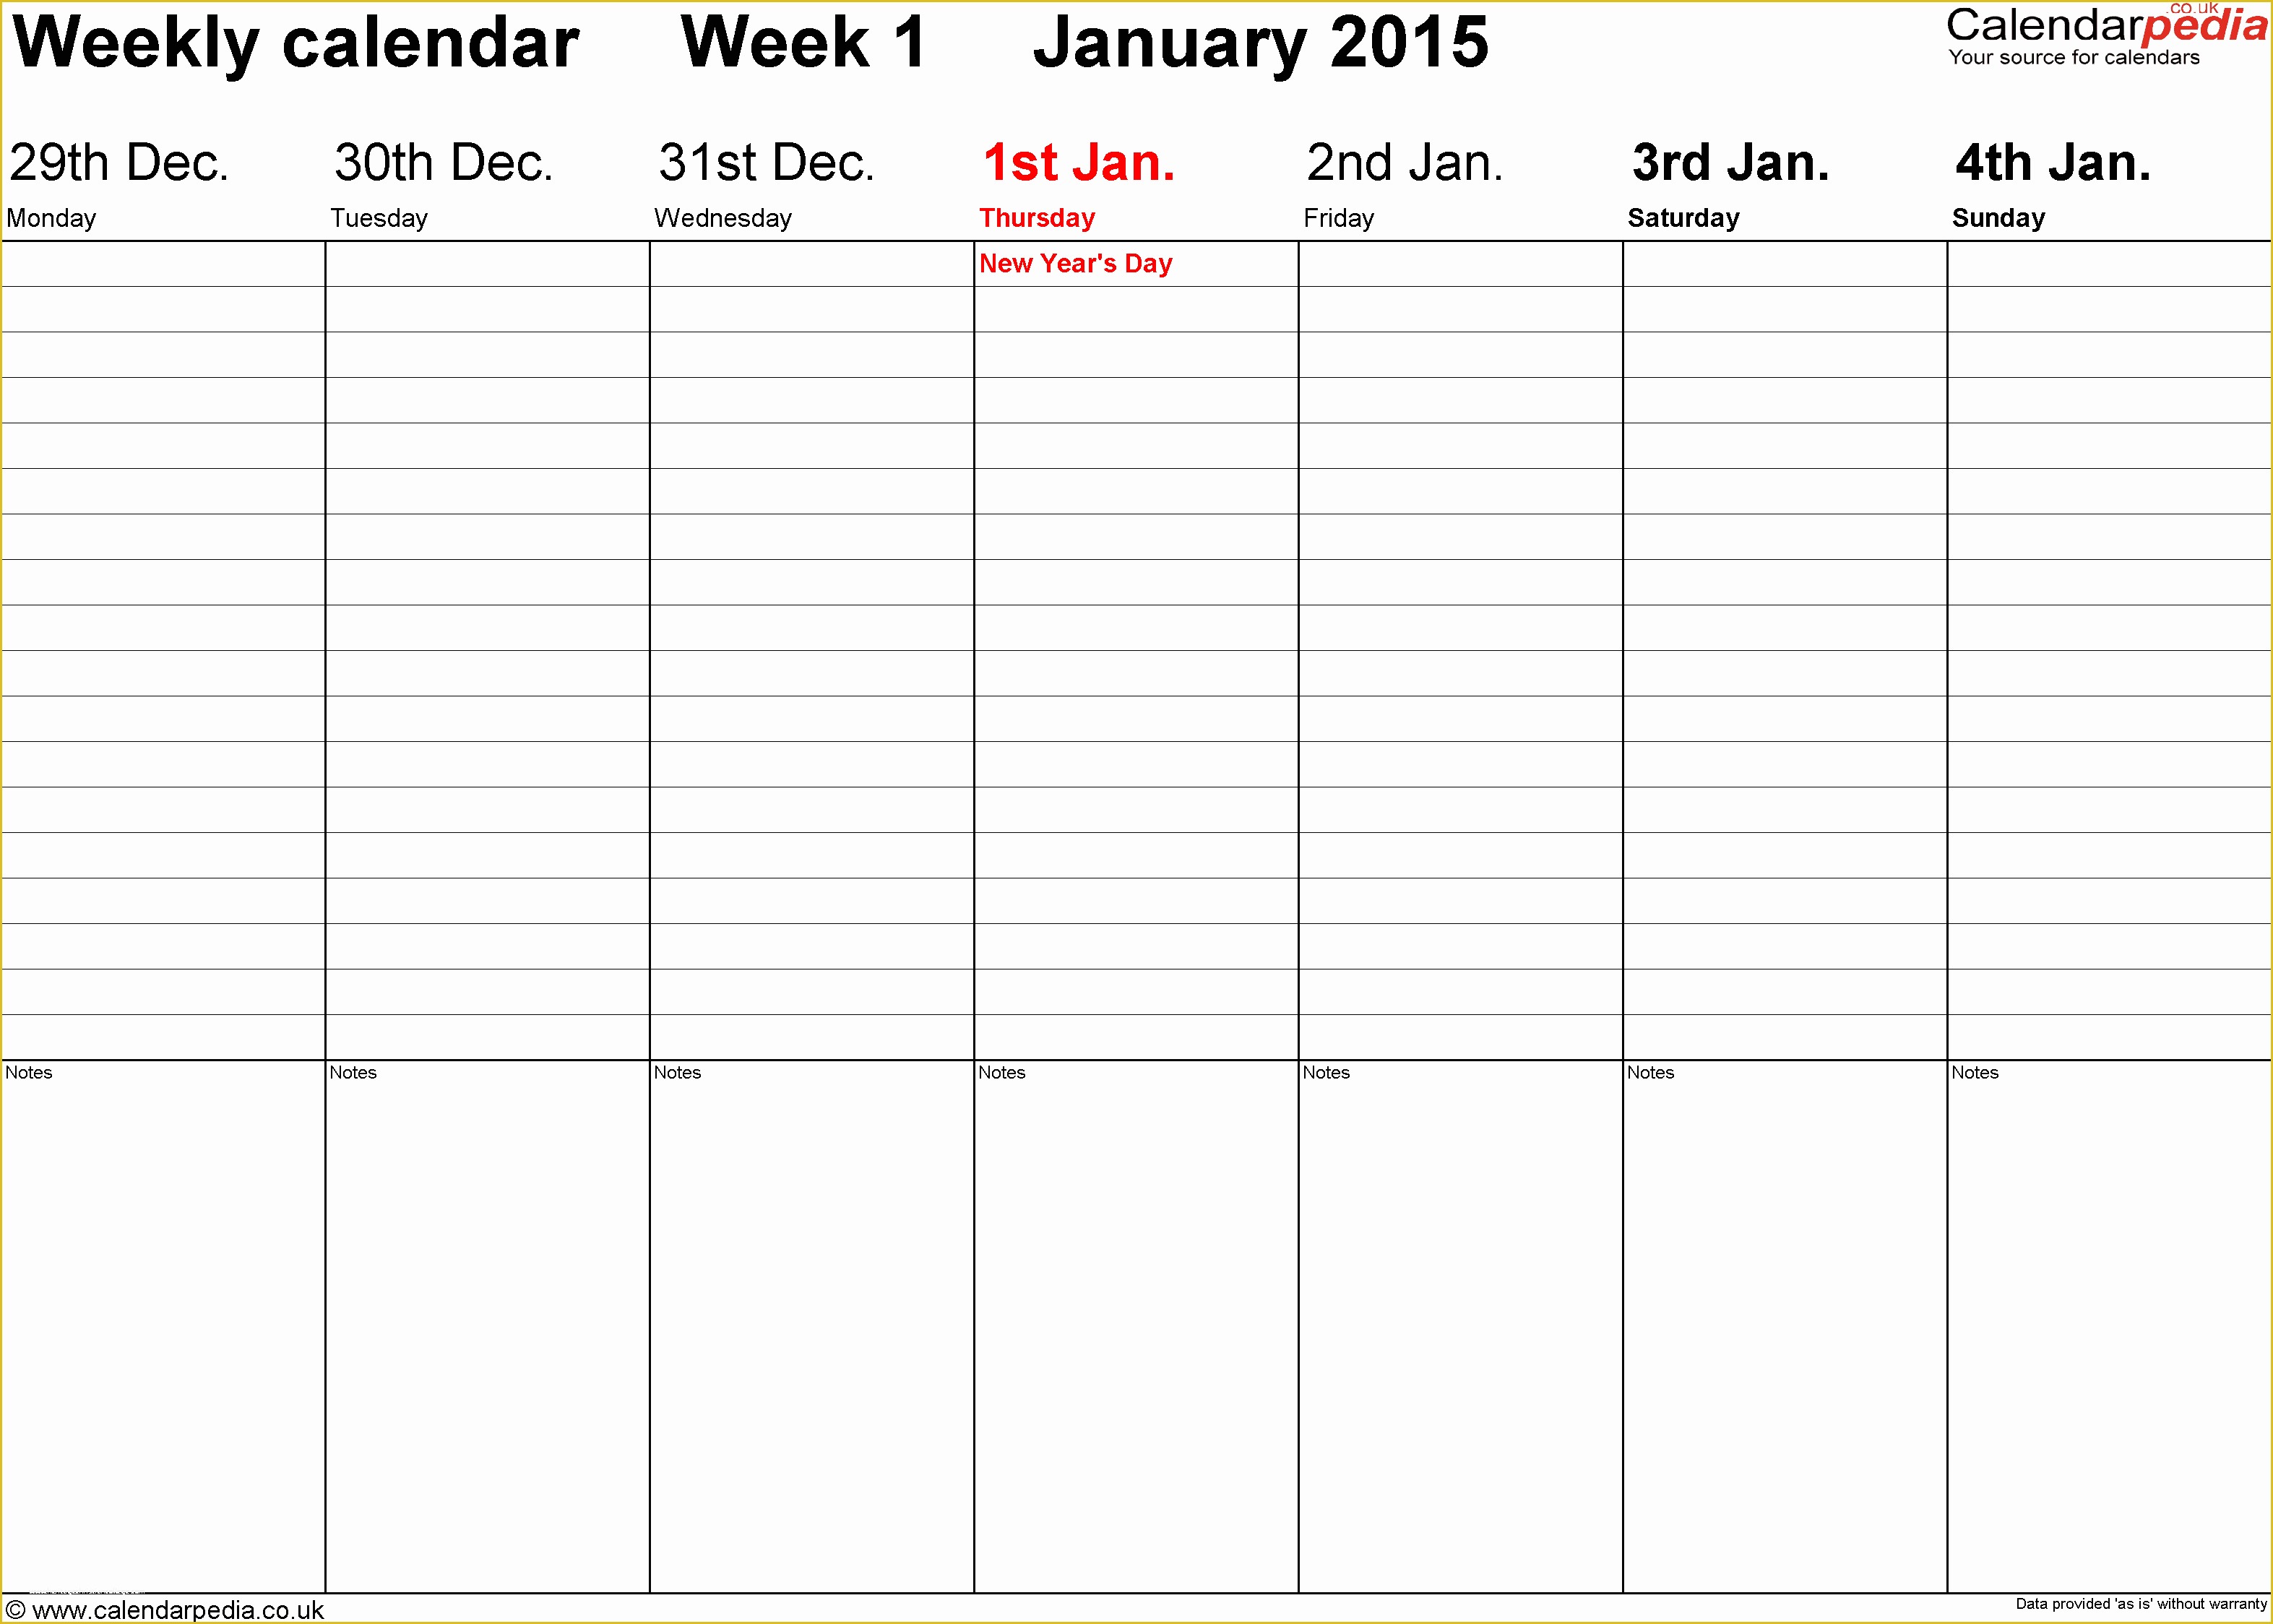 Free Weekly Planner Template Word Of Weekly Calendar 2015 Uk Free Printable Templates for Word